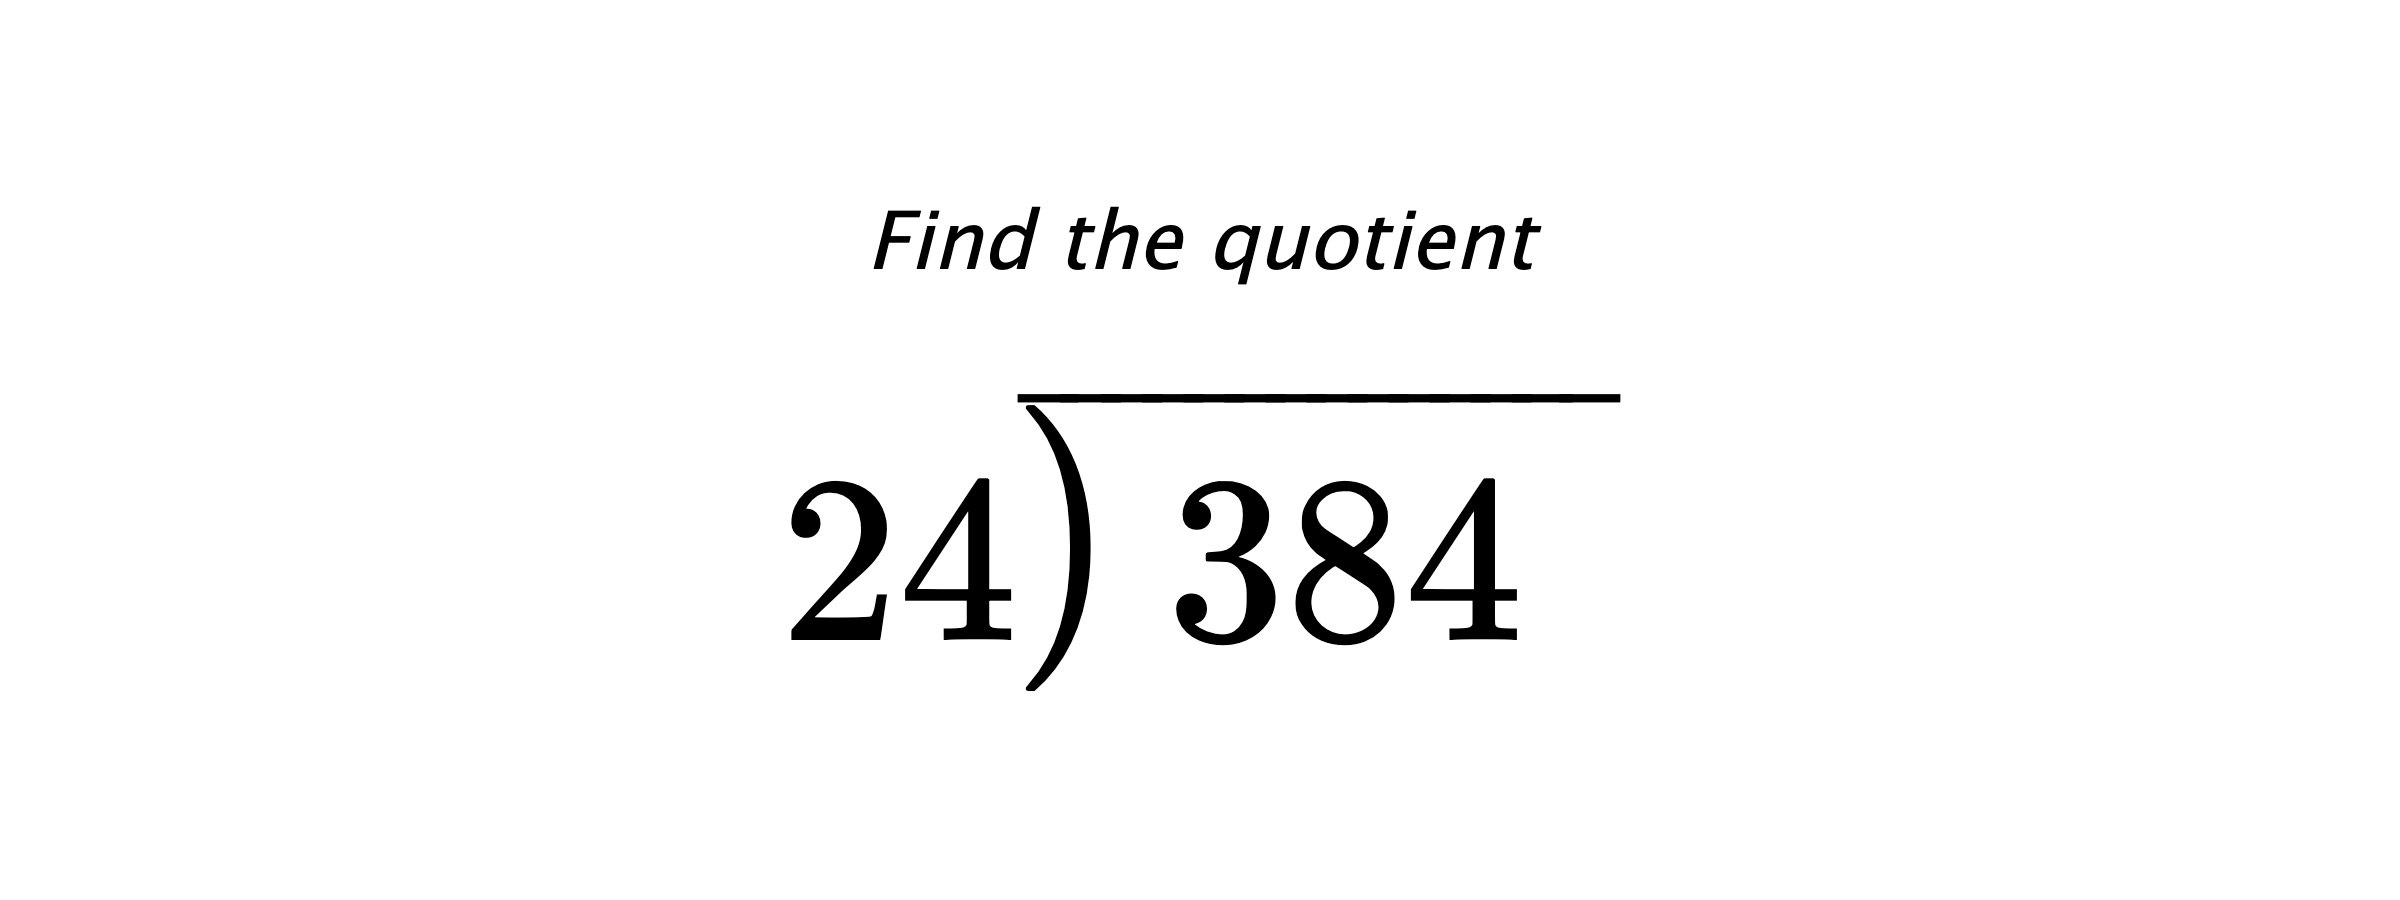 Find the quotient $ 24{\overline{\smash{\raise.3ex\hbox{$\big)$}}\,384\phantom{)}}} $